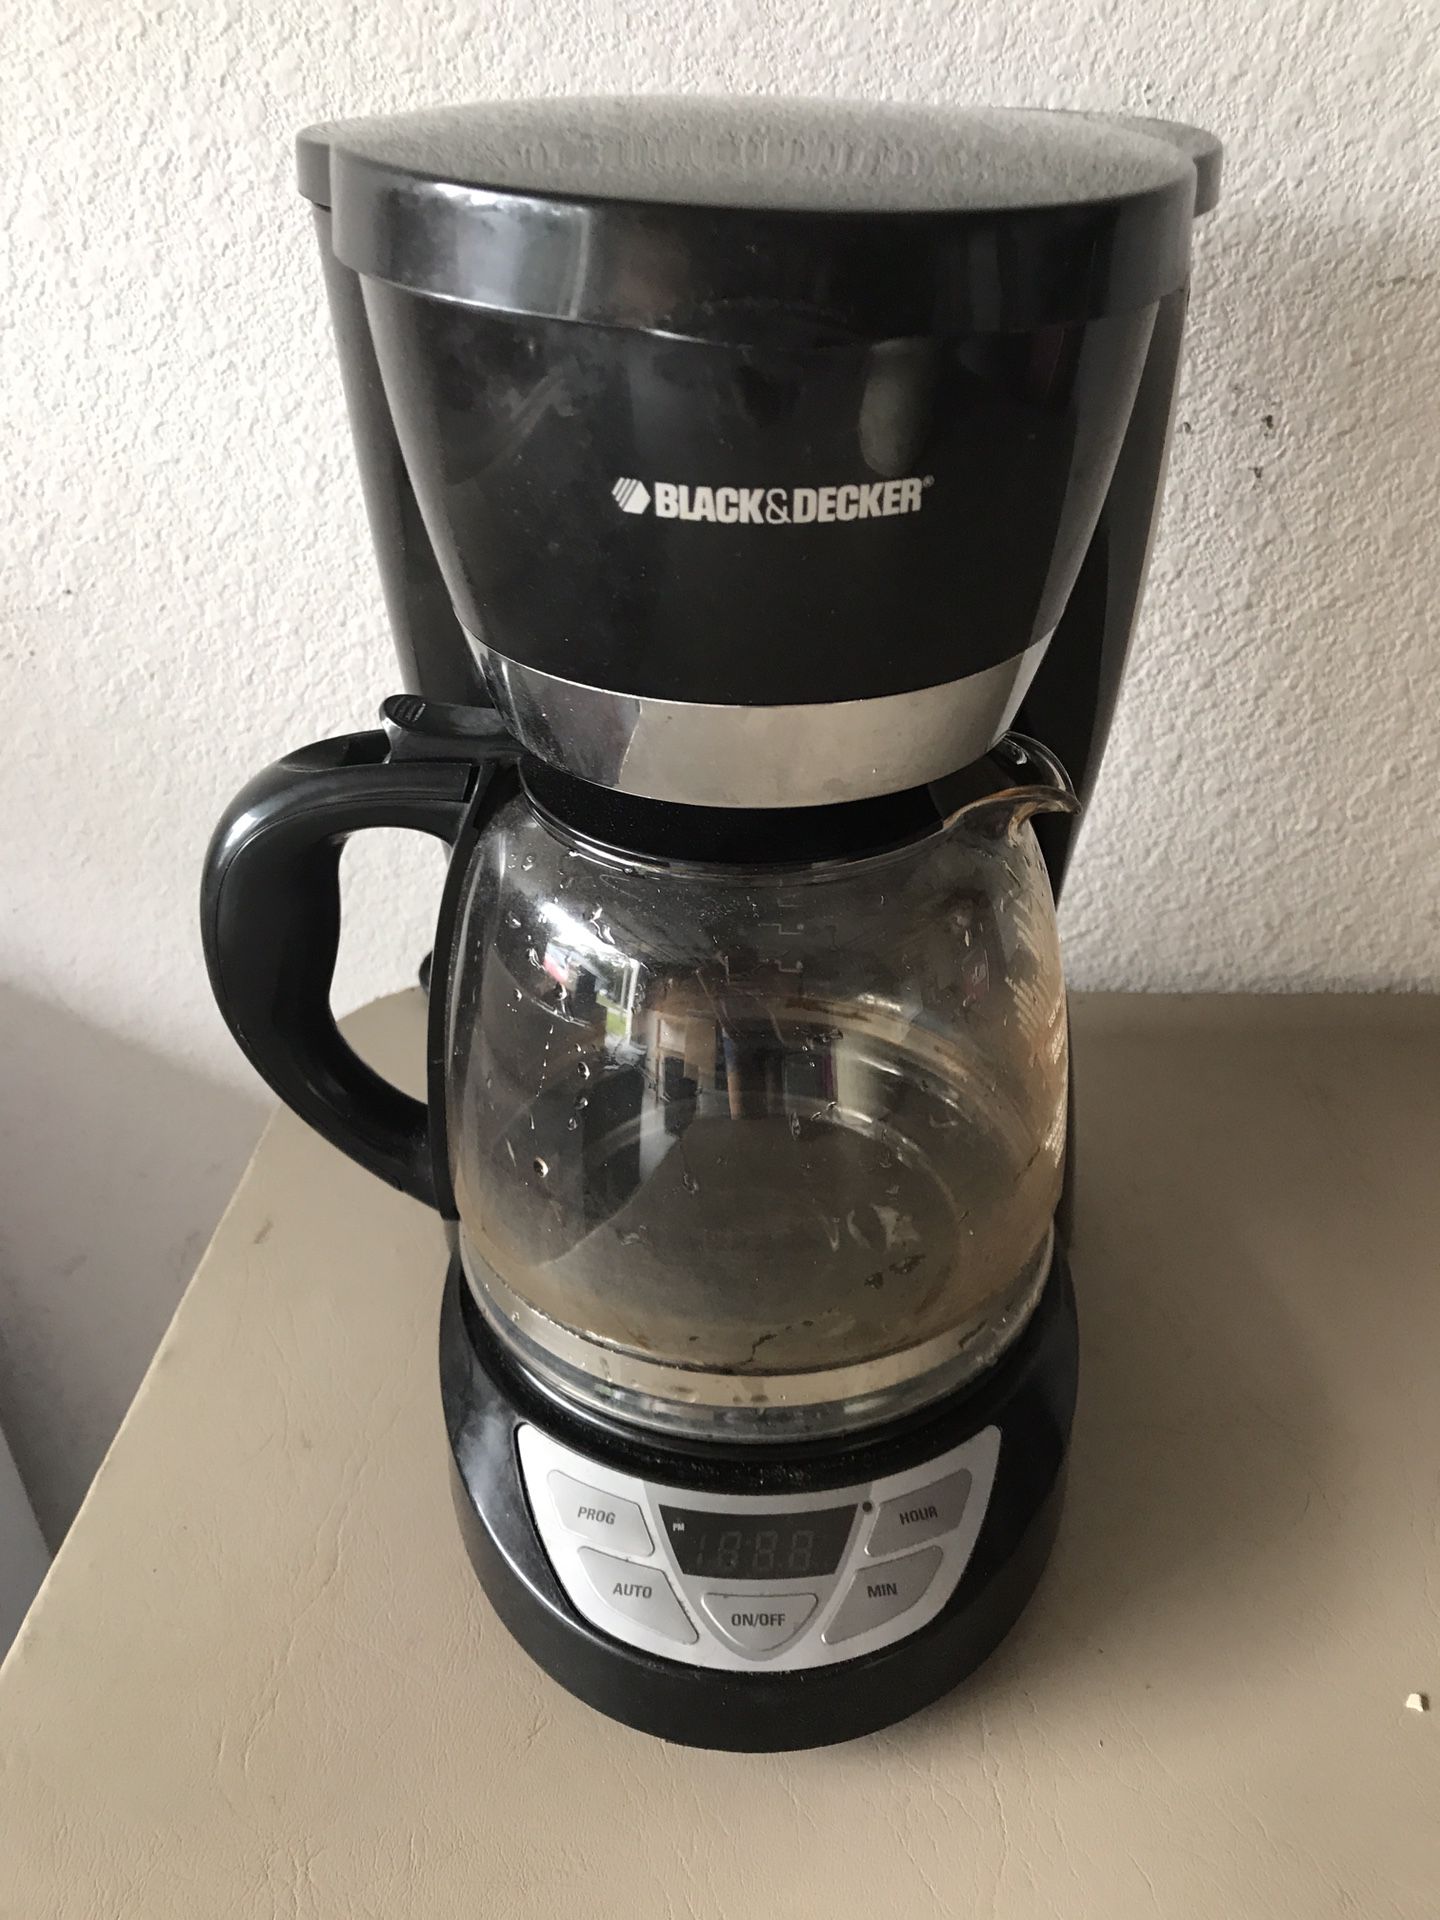 Black and decker coffee maker, $4!